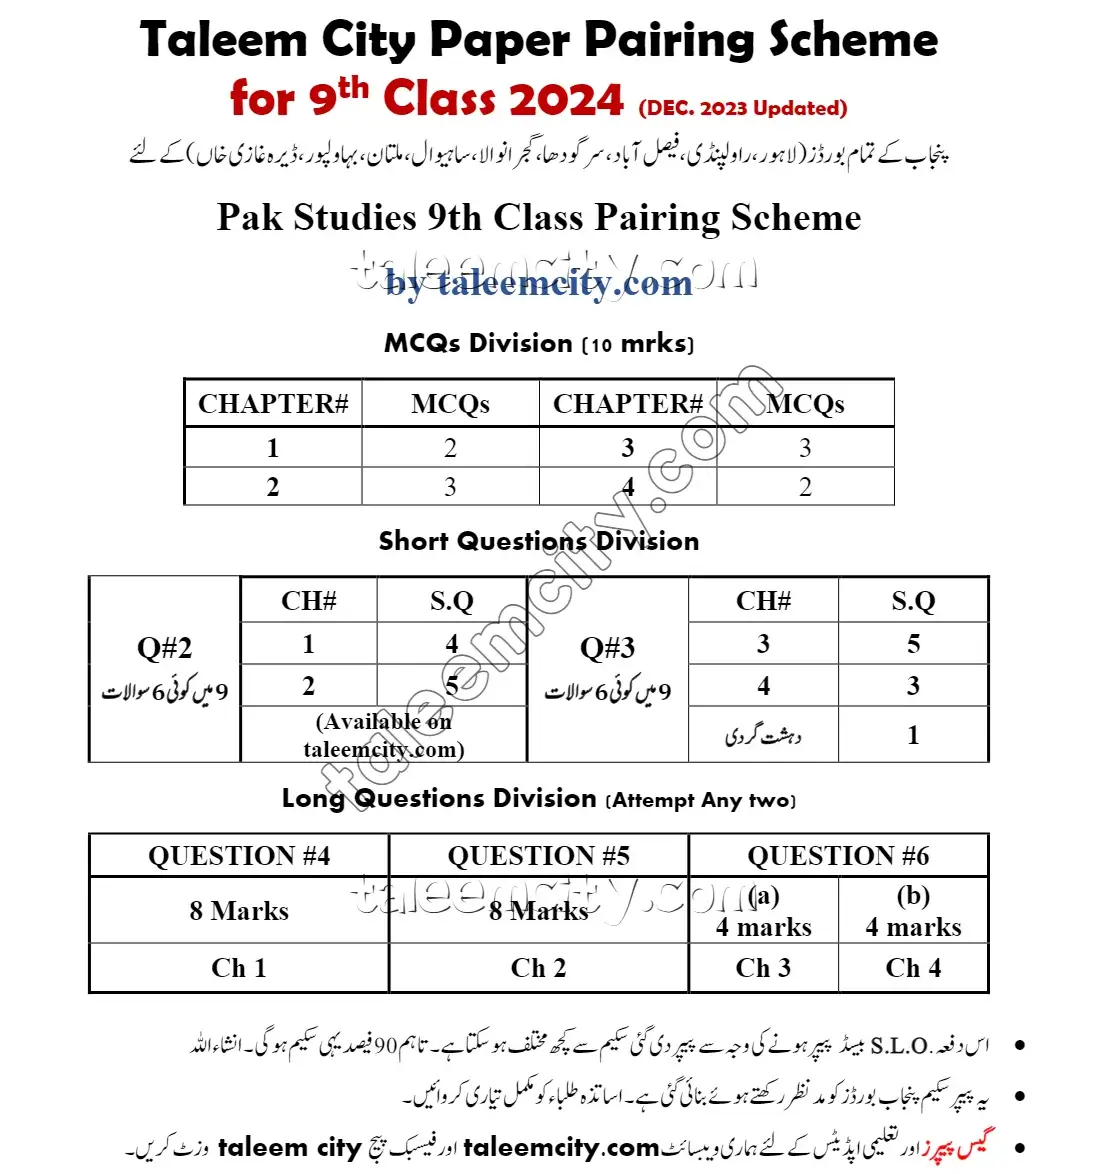 9th Class Pak Study Pairing Scheme 2024.webp